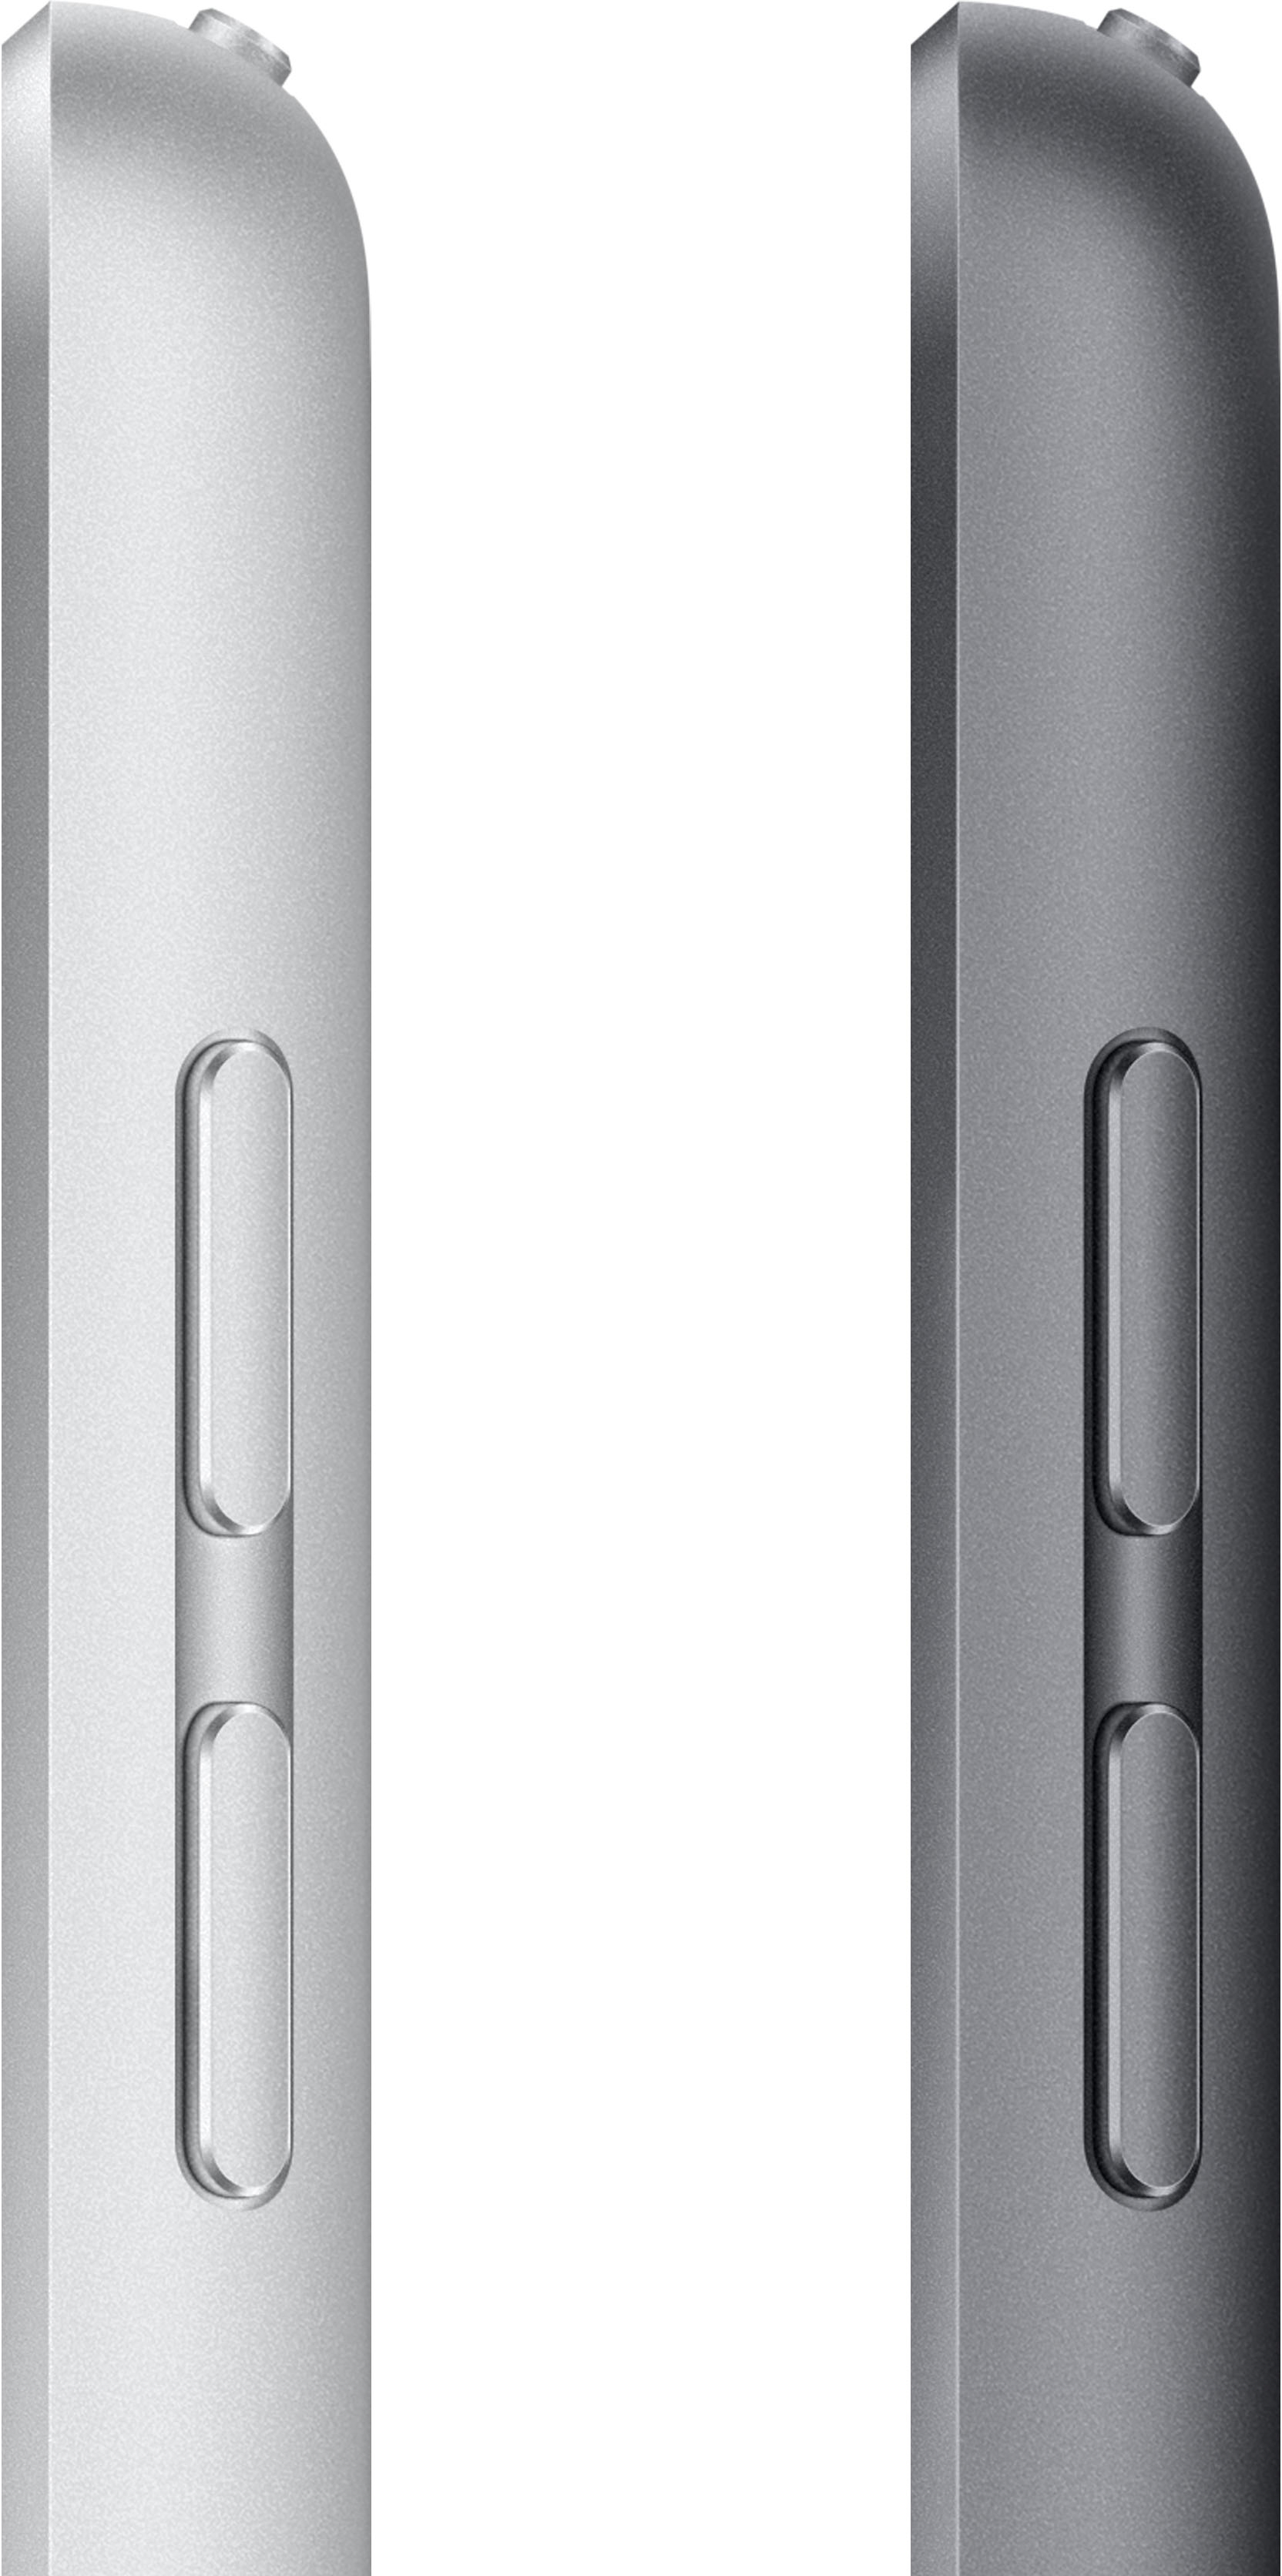 Apple 10.2-Inch iPad (9th Generation) with Wi-Fi 256GB Silver 